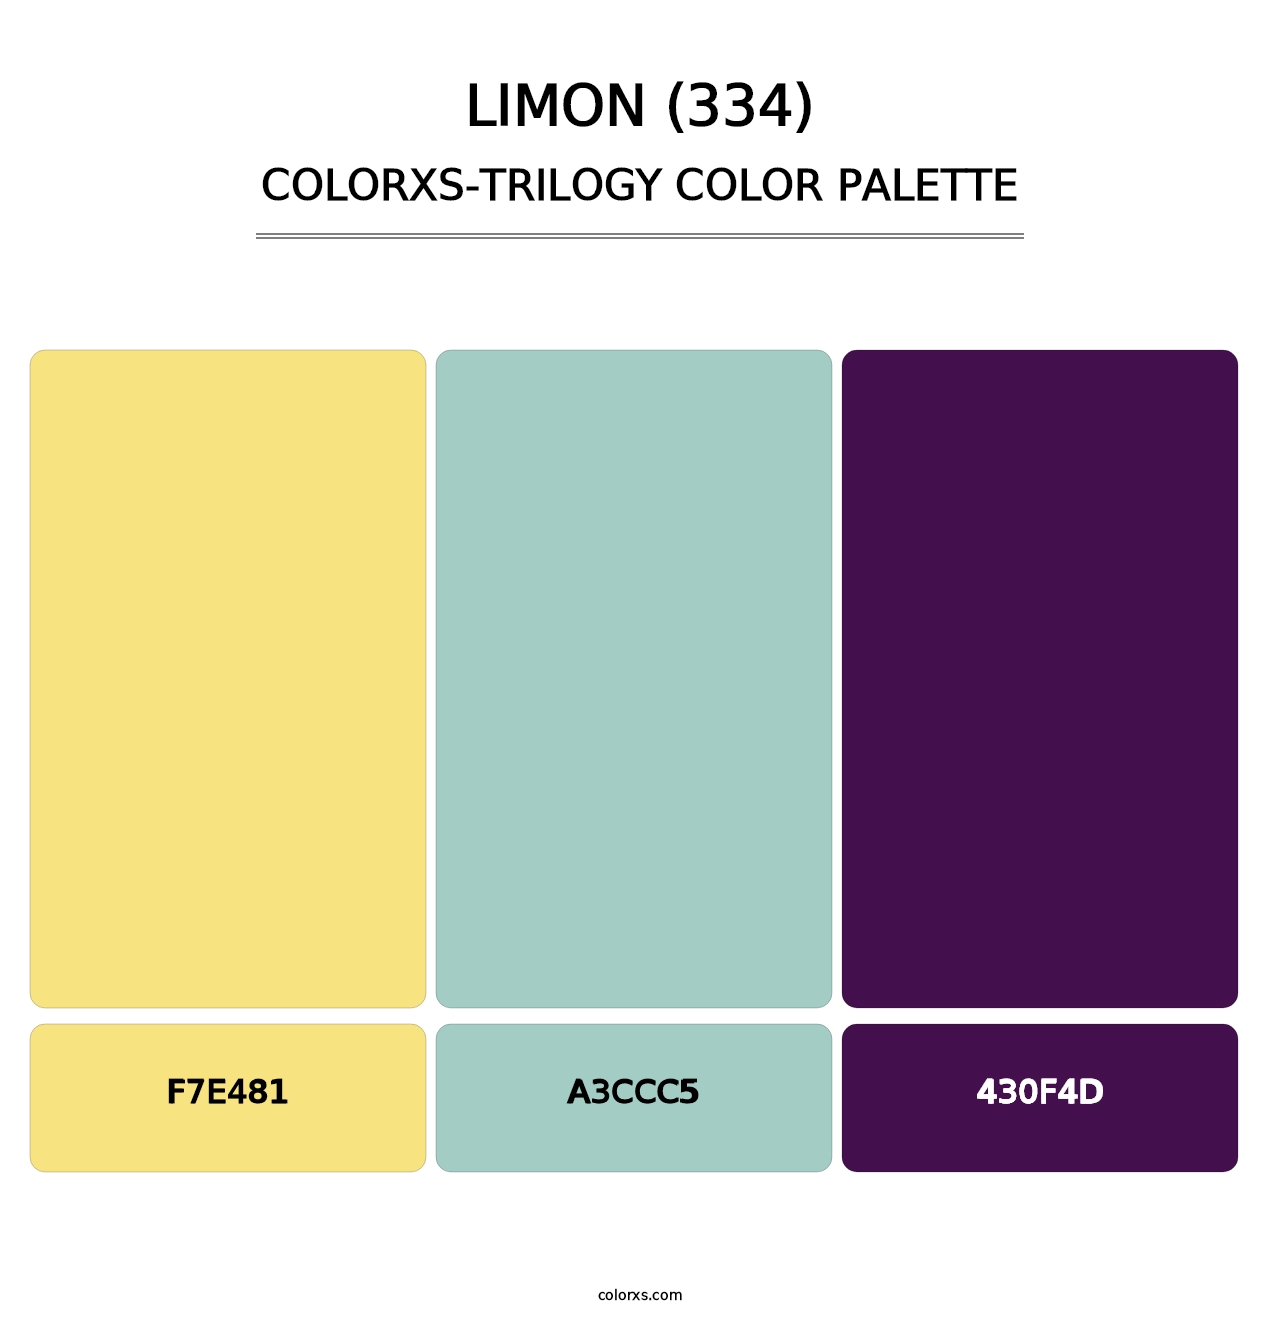 Limon (334) - Colorxs Trilogy Palette